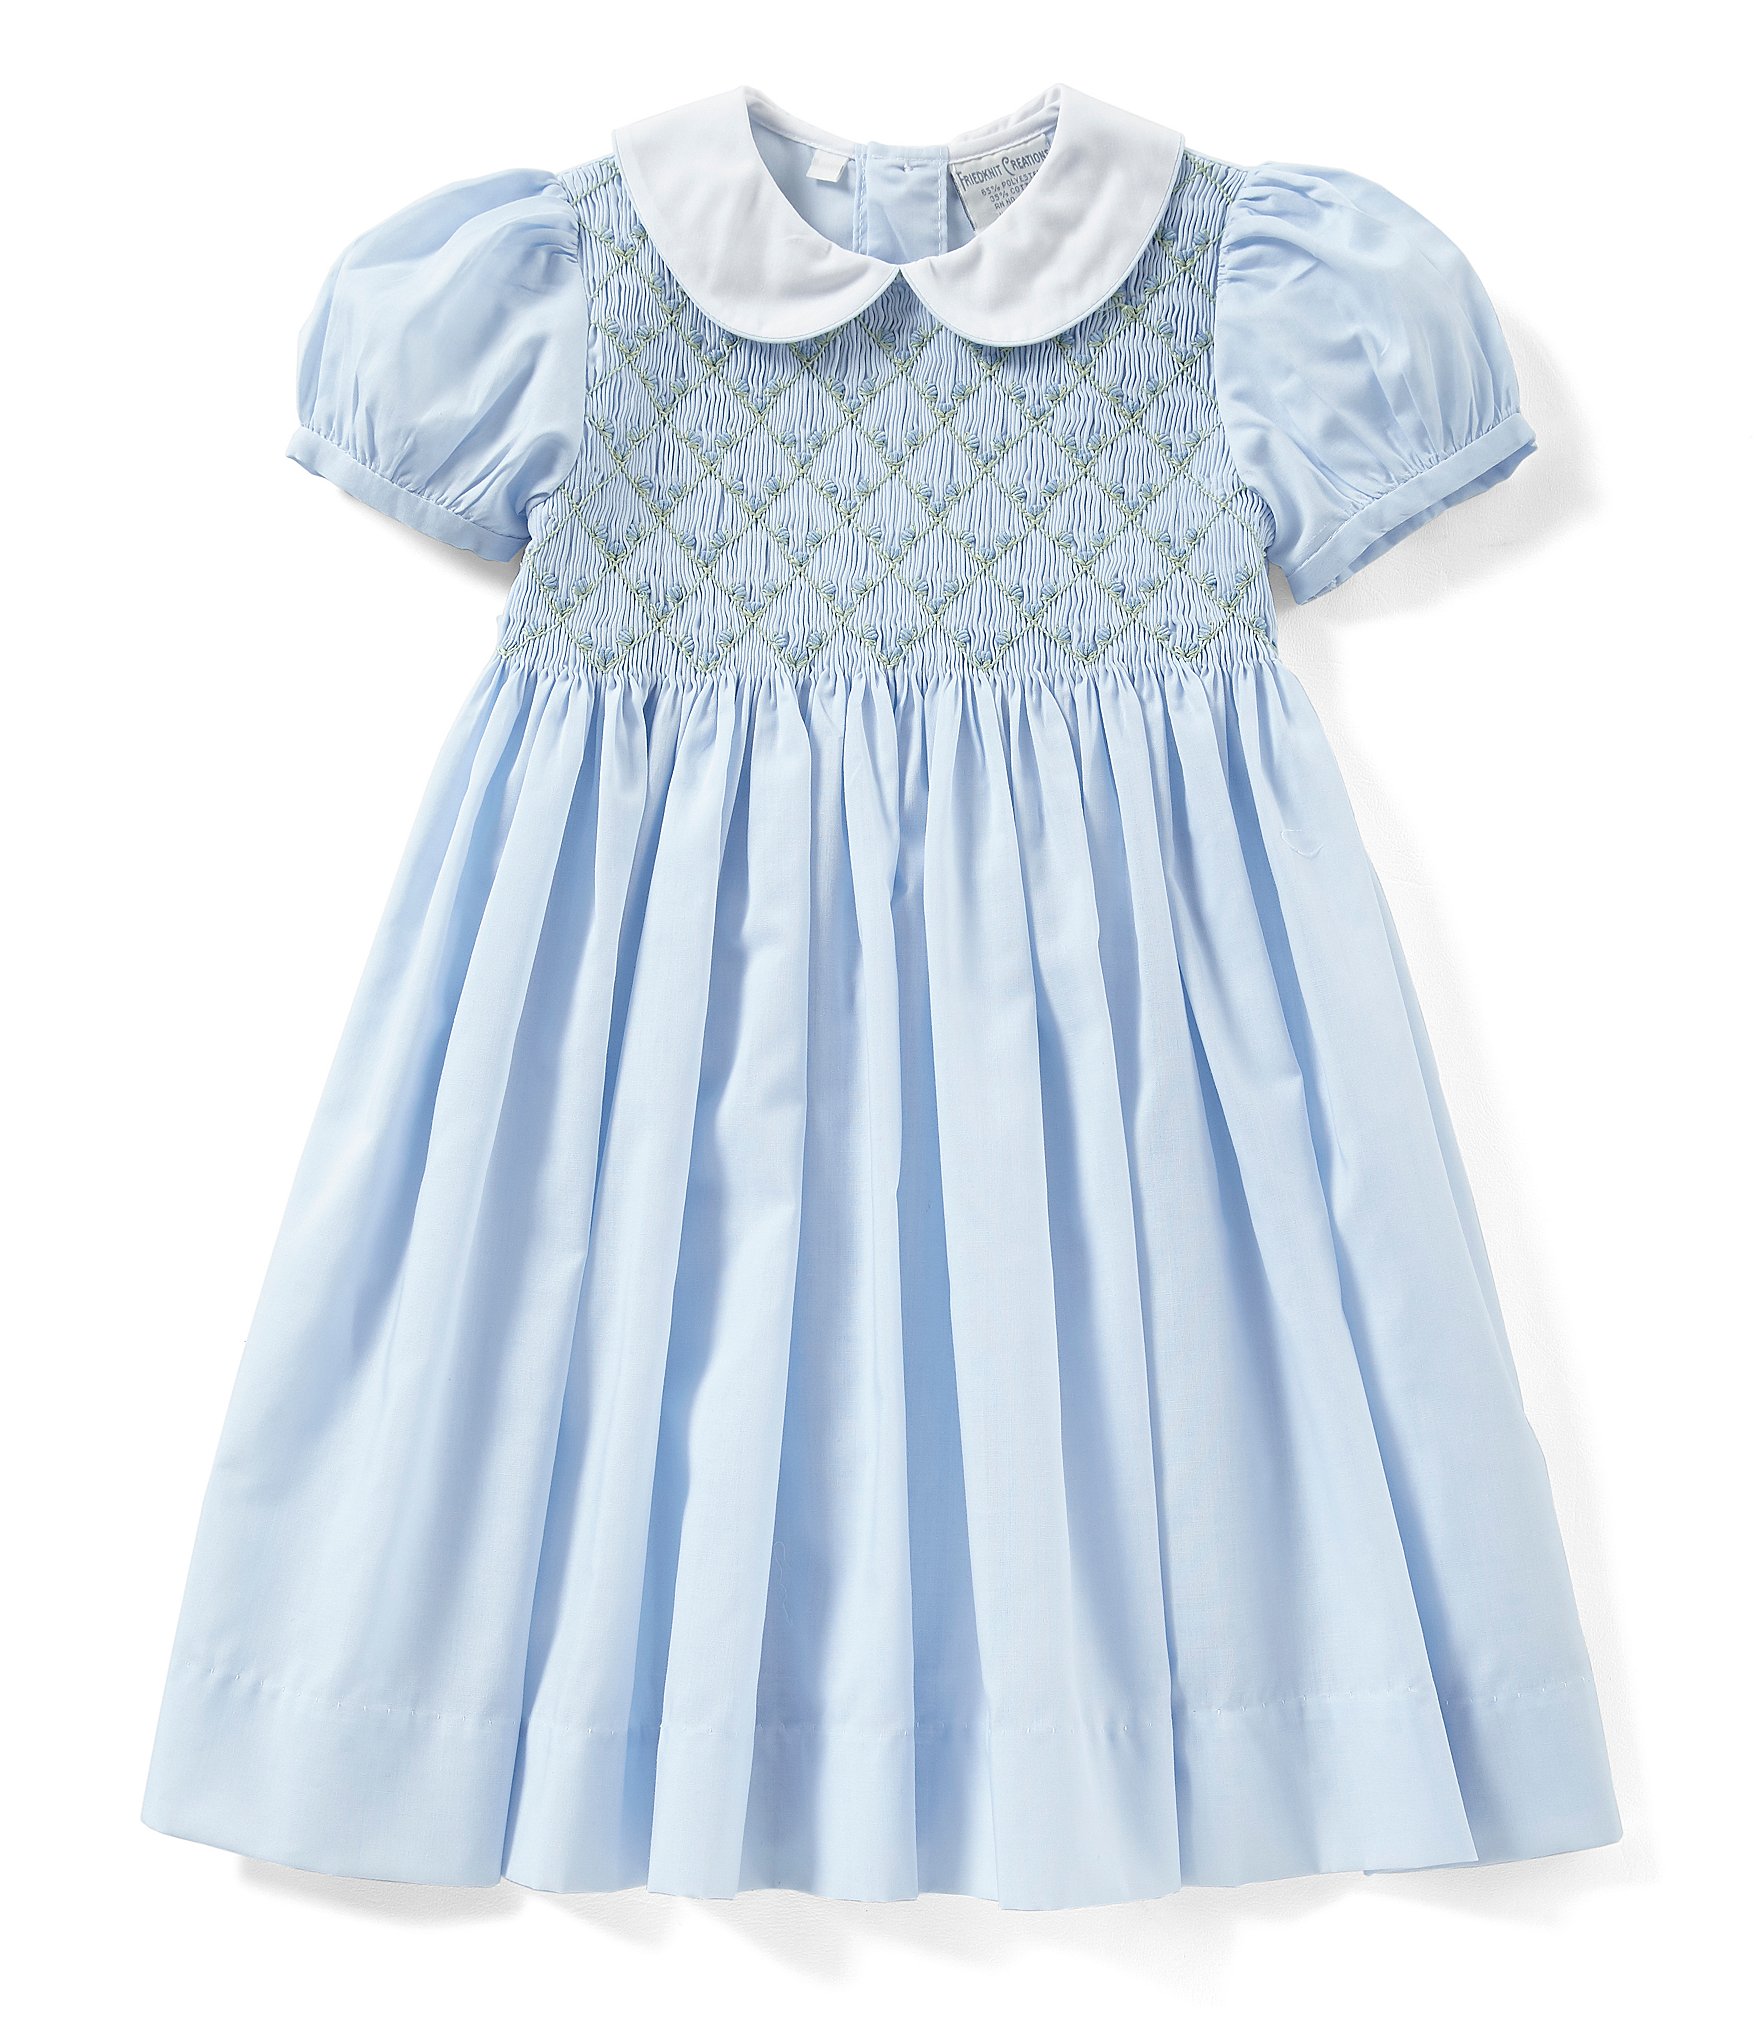 Smocked Dresses For Toddlers Shop, 60 ...